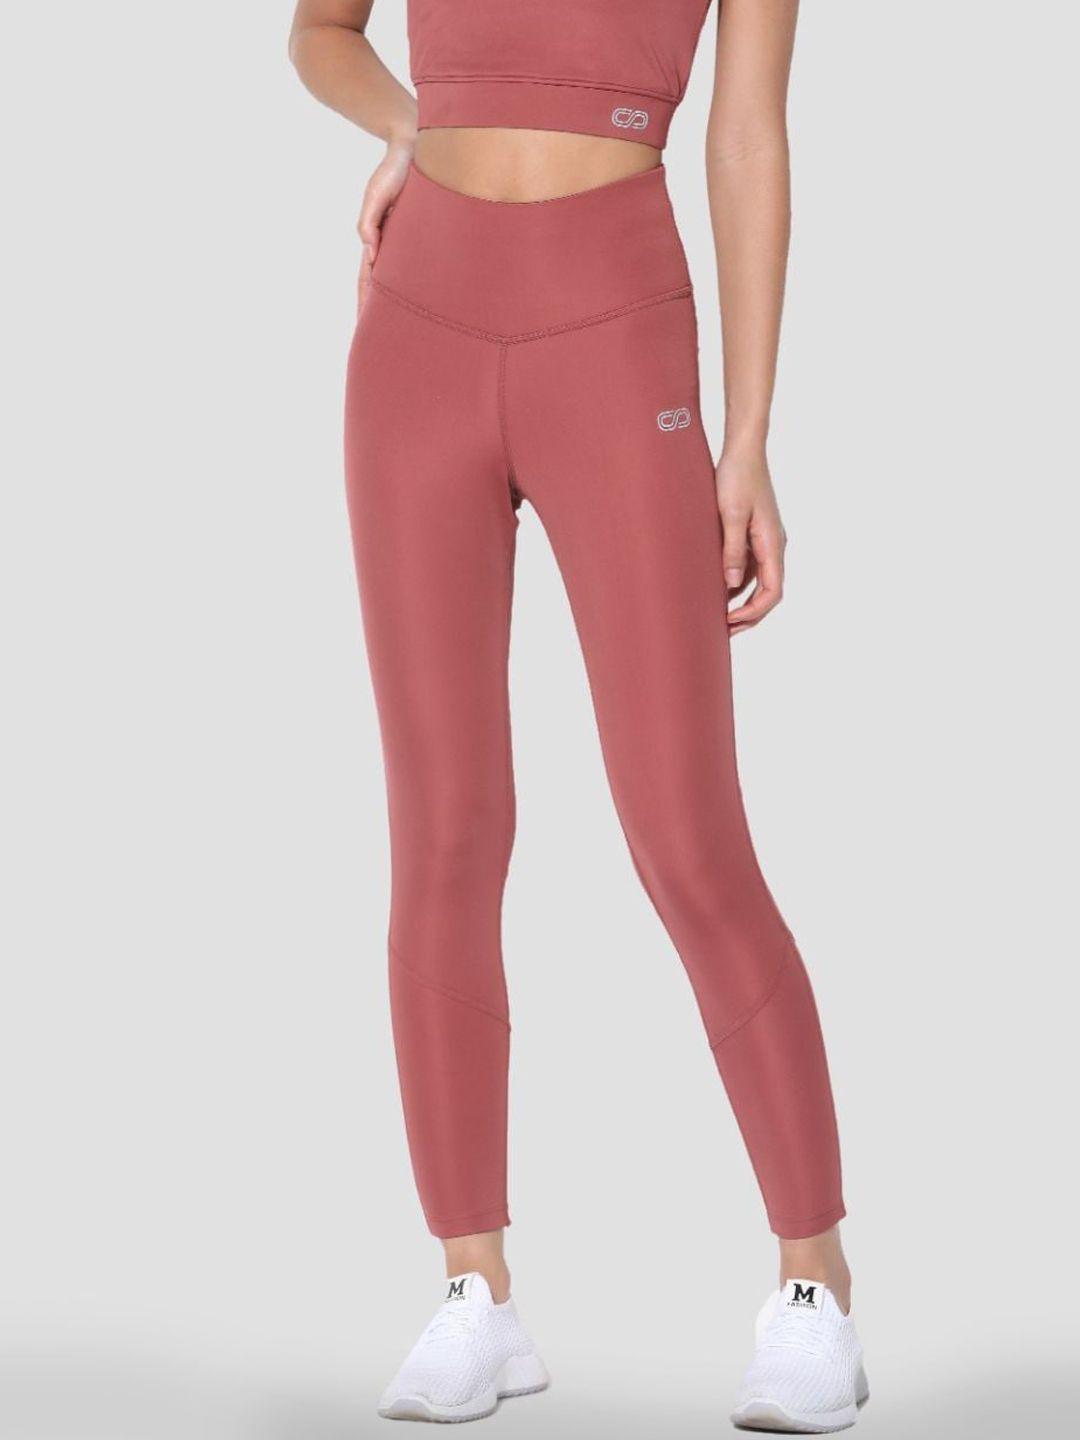 silvertraq women dusty pink high-waist dry-fit tights